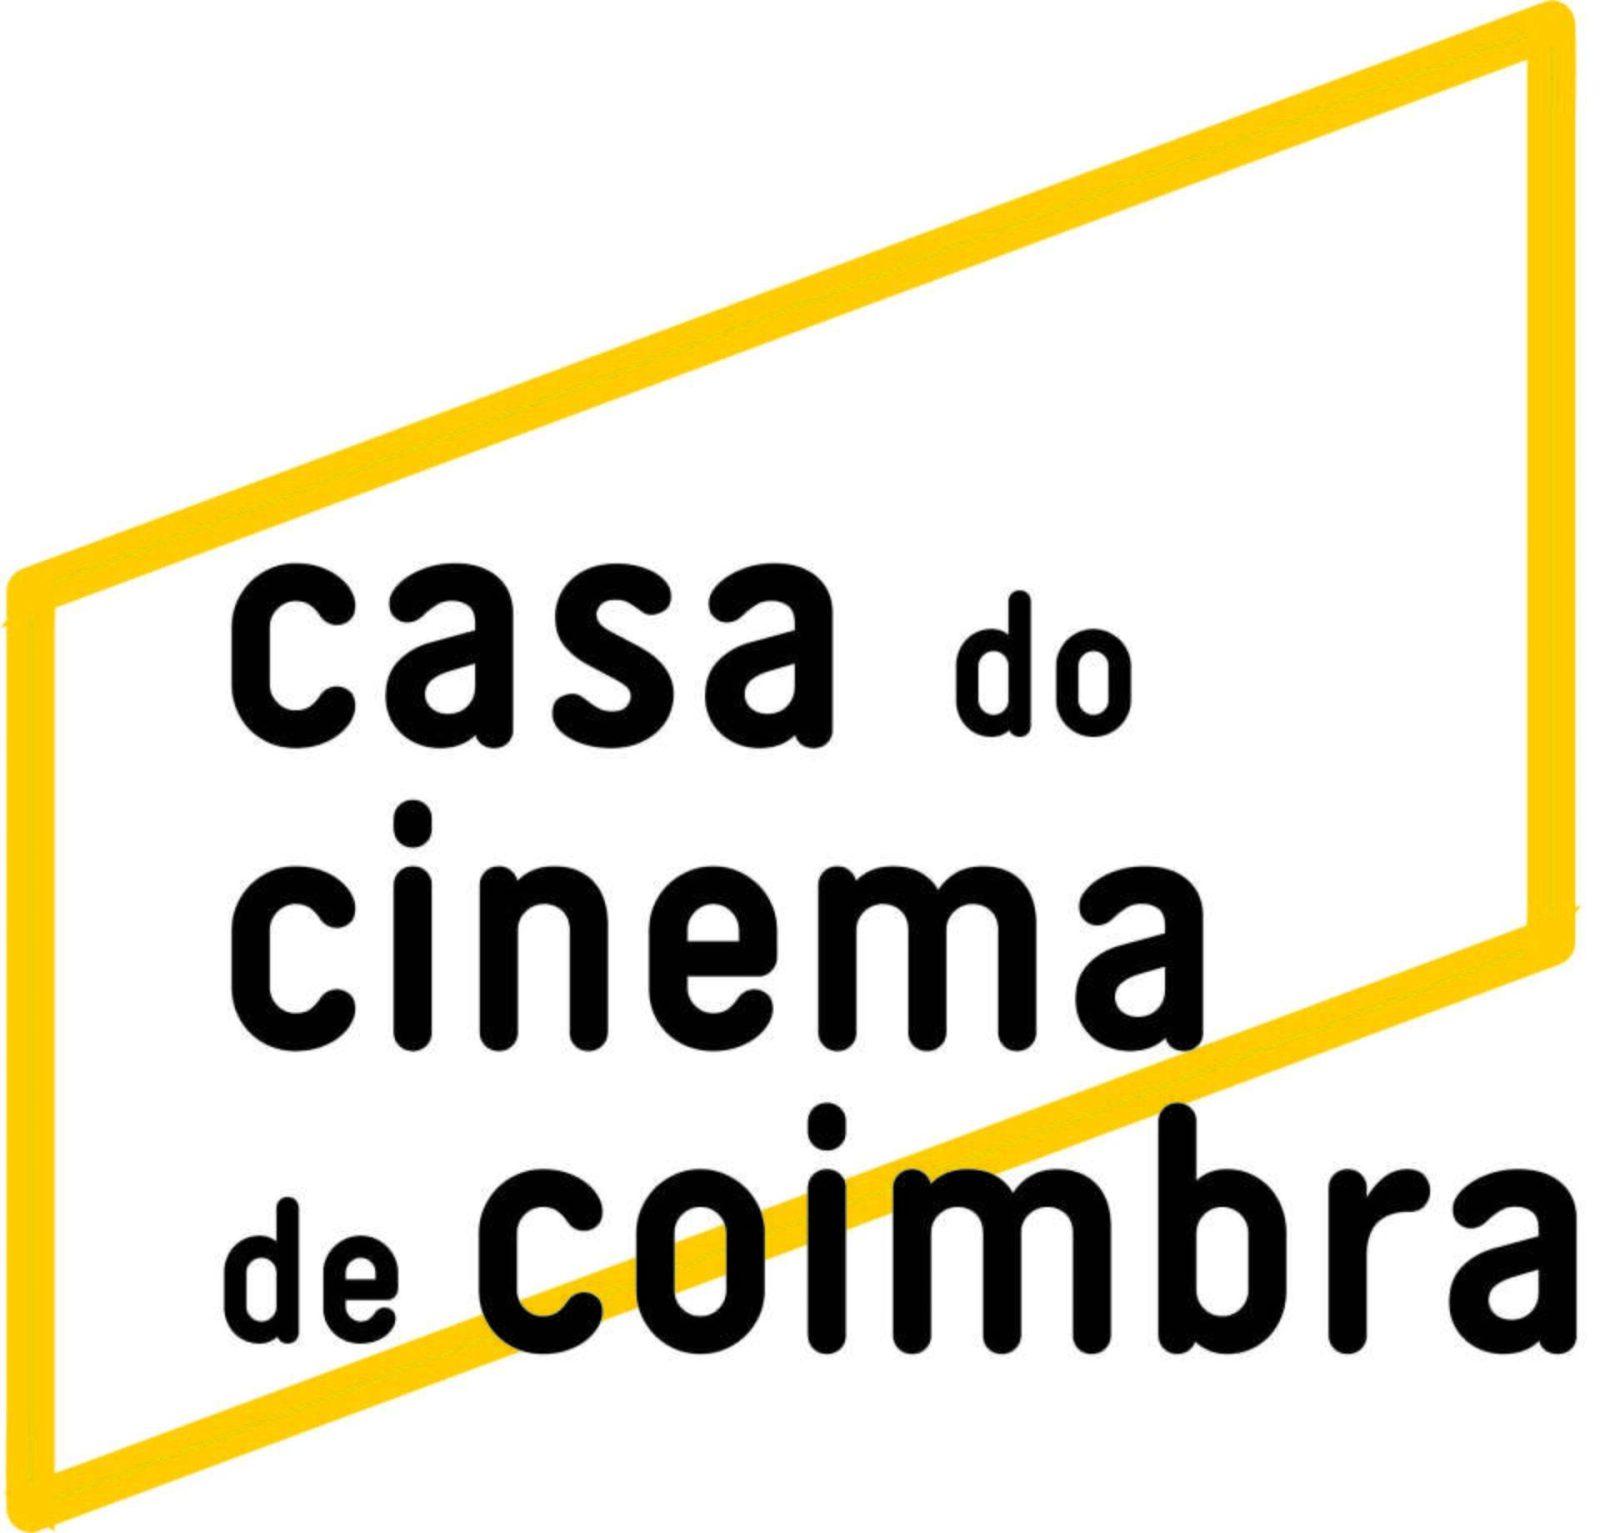 Próximas sessões,Programação Cinema Coimbra,Casa do Cinema de Coimbra,Cineclube,cineclubismo